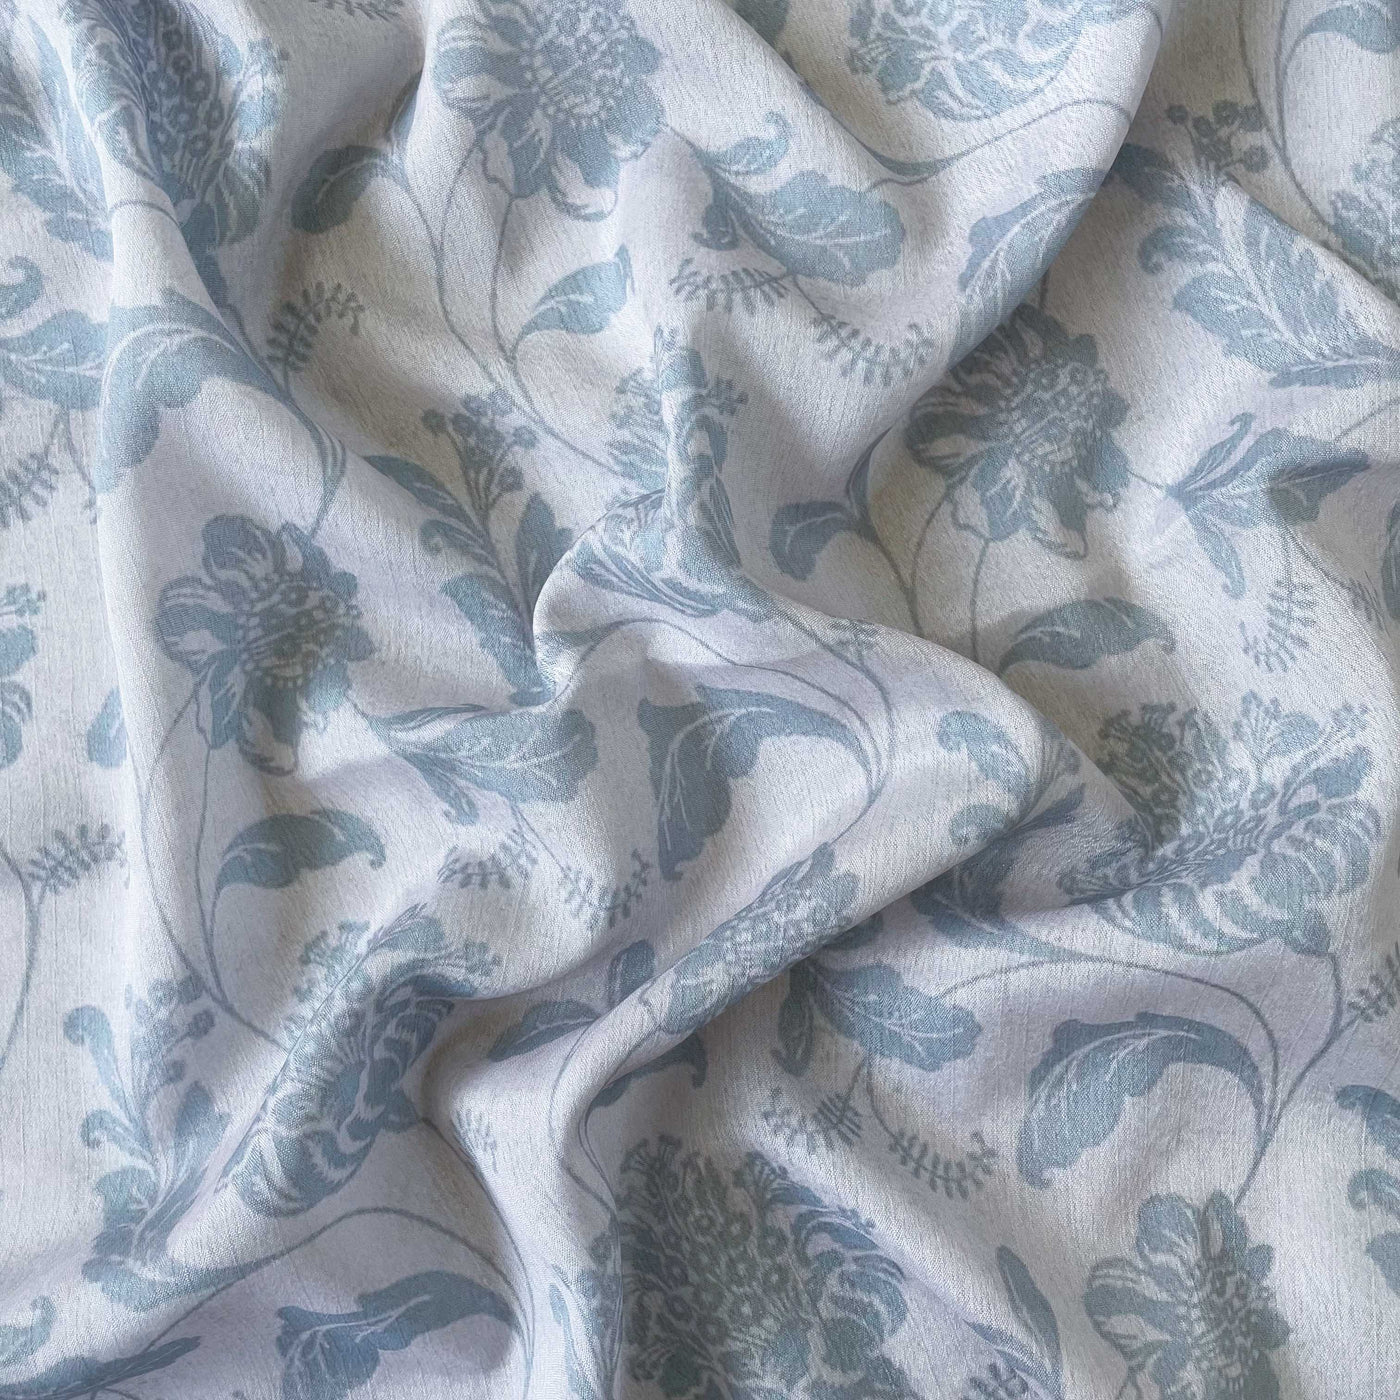 Digital Printed Tussar Satin Fabric Fabric Dull Blue & Grey Abstract Floral Printed Tussar Satin Fabric (Width 42 Inches)